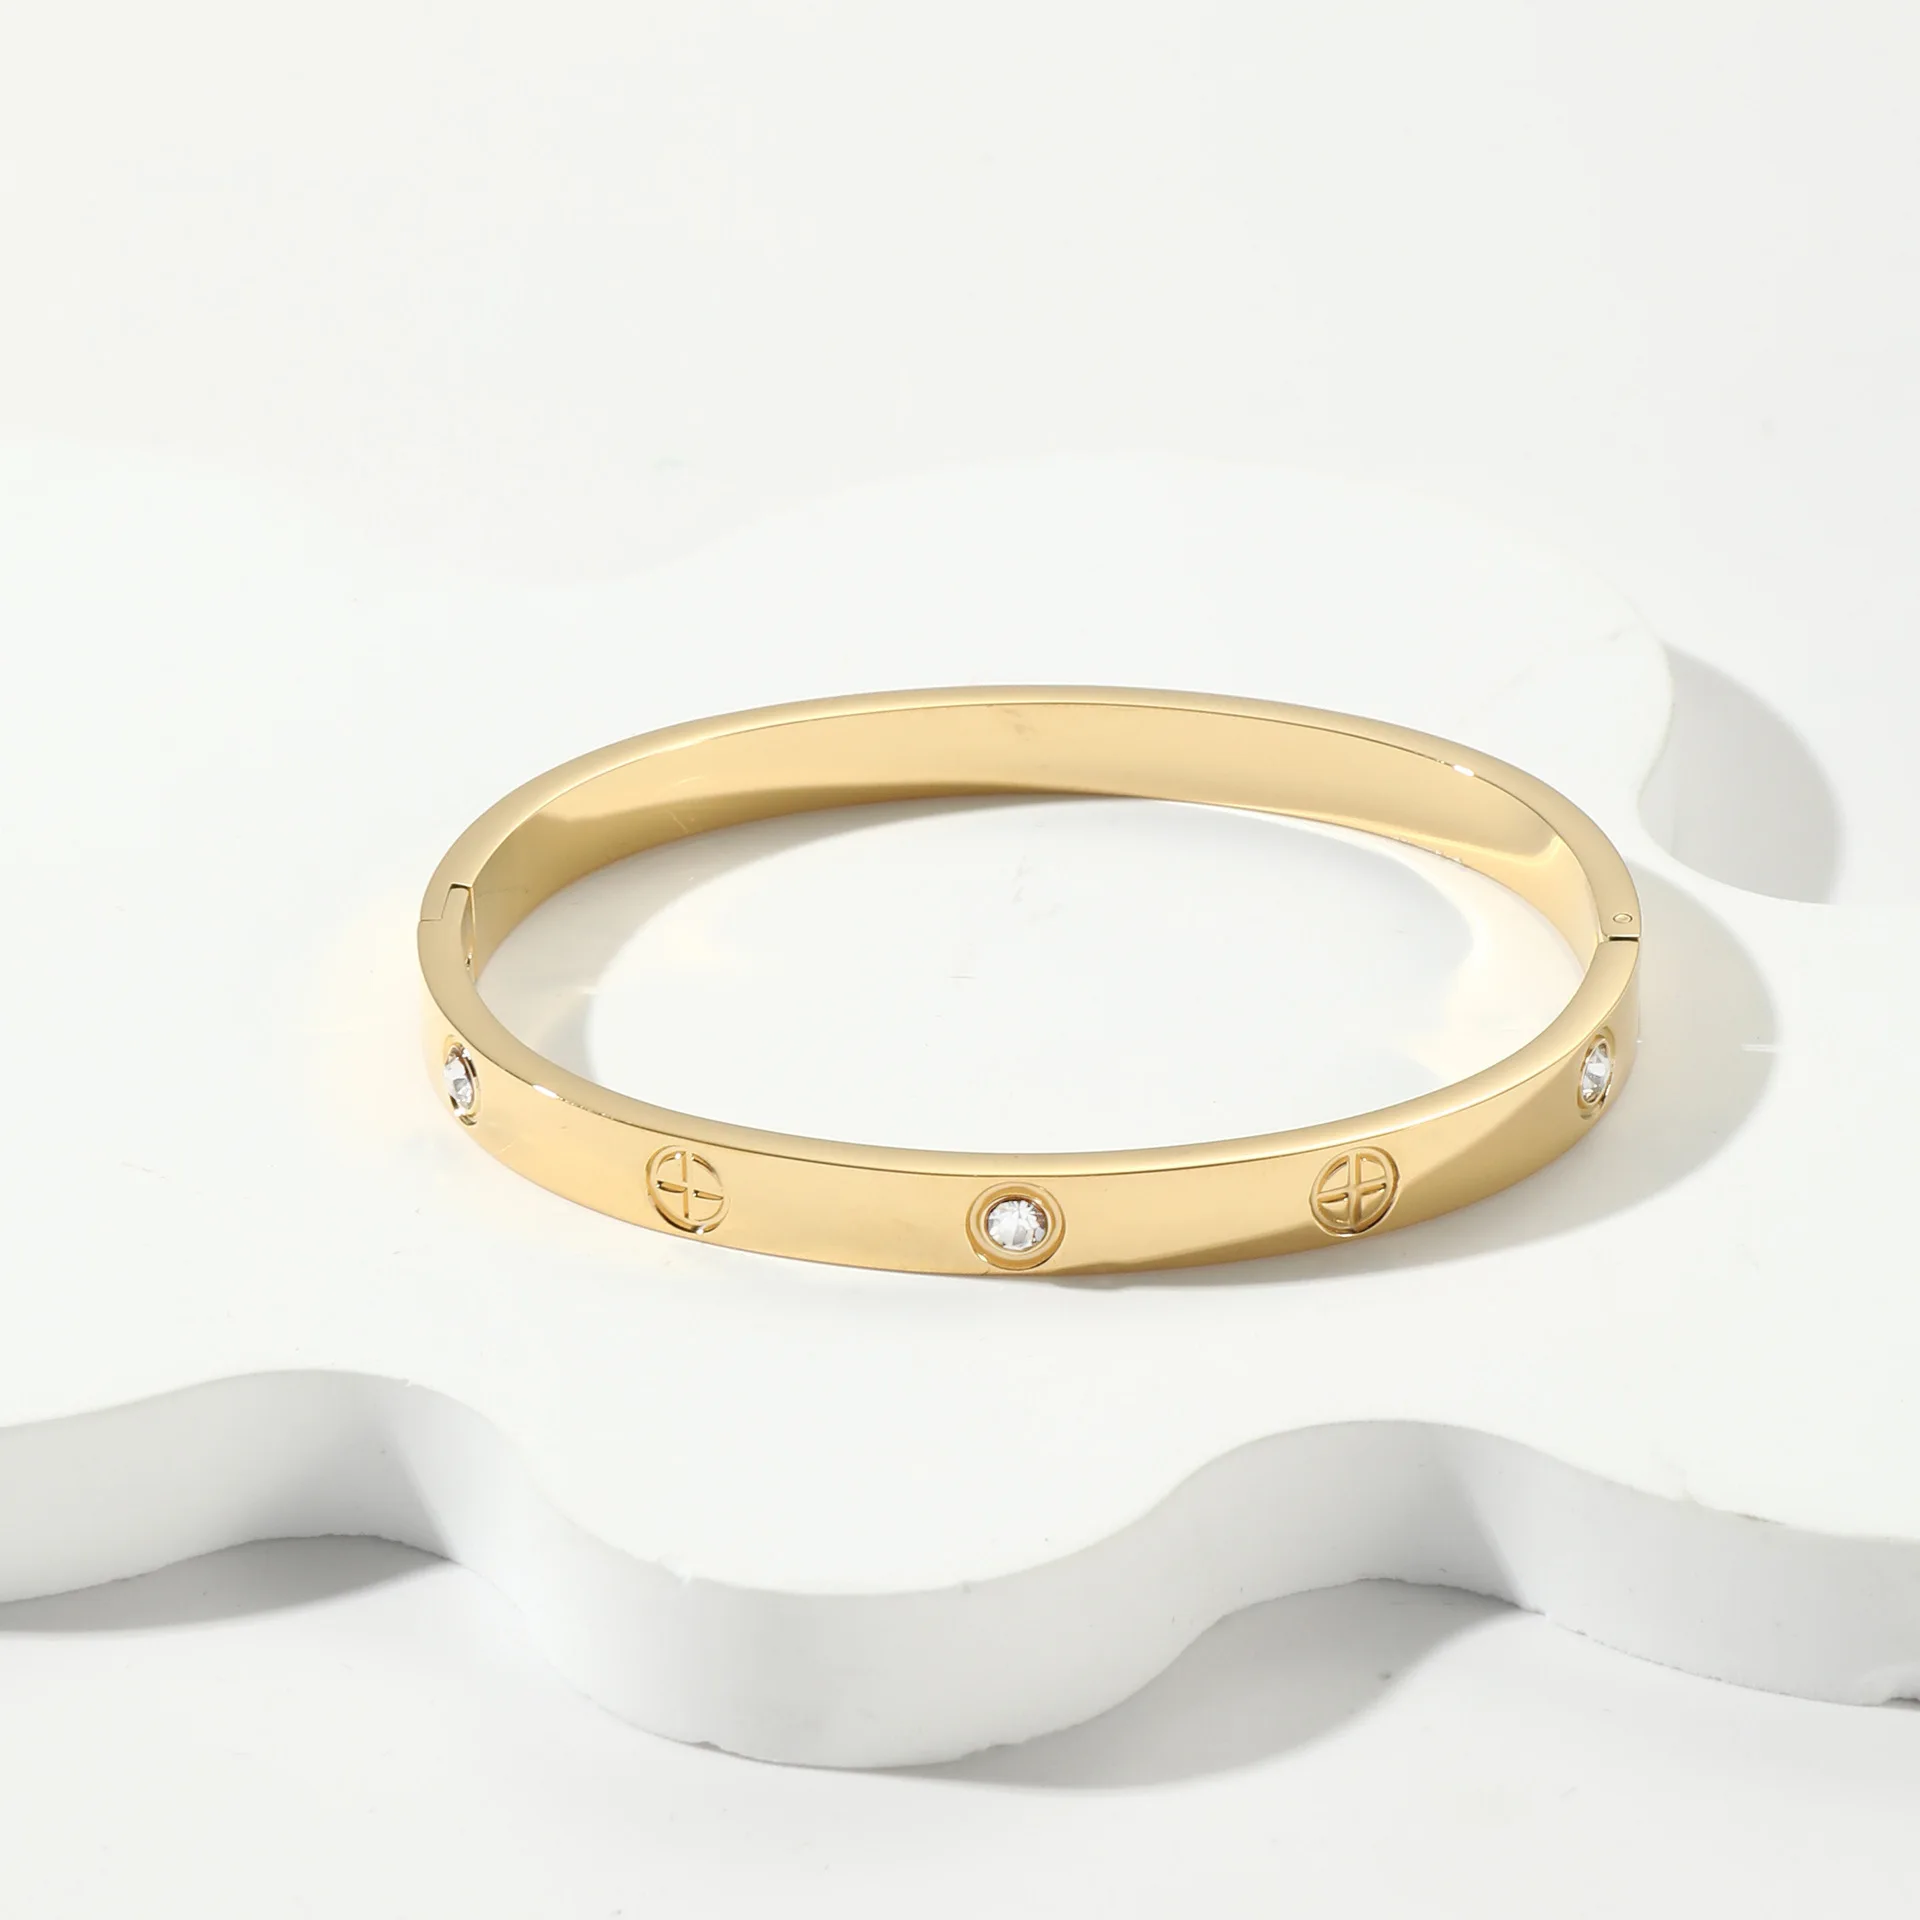 Fashion Cross Titanium Steel Bracelet with Zircons 18K Gold Plated Waterproof Jewelry Gift for Women Girlfriend Sisters Mother